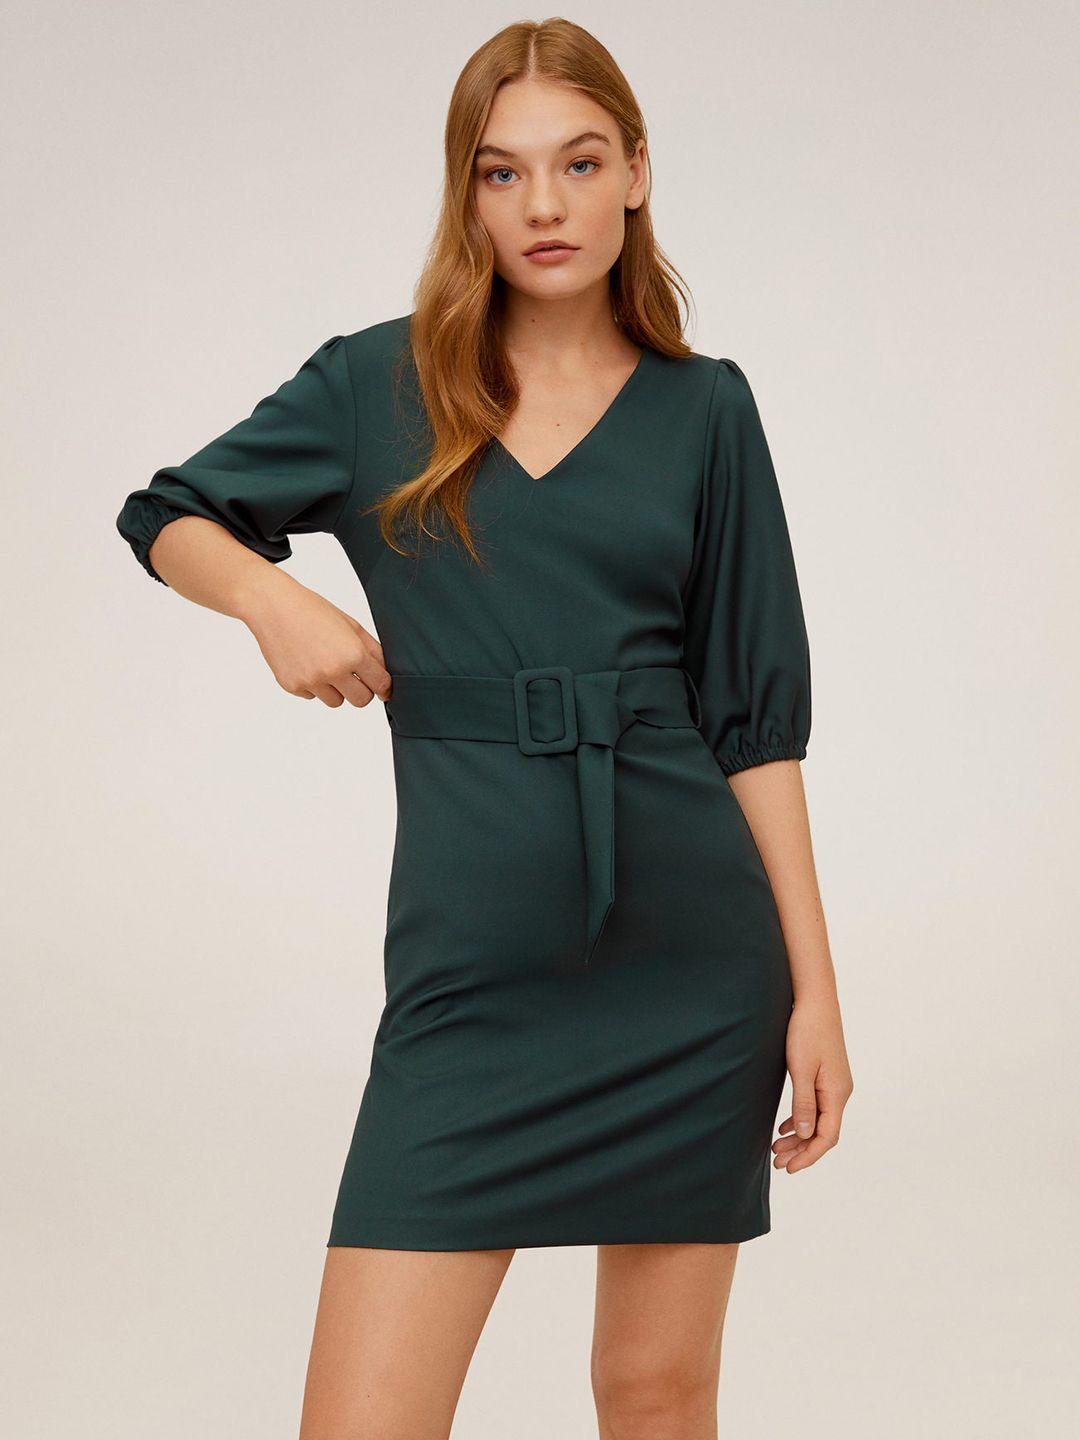 mango women teal green solid sheath dress